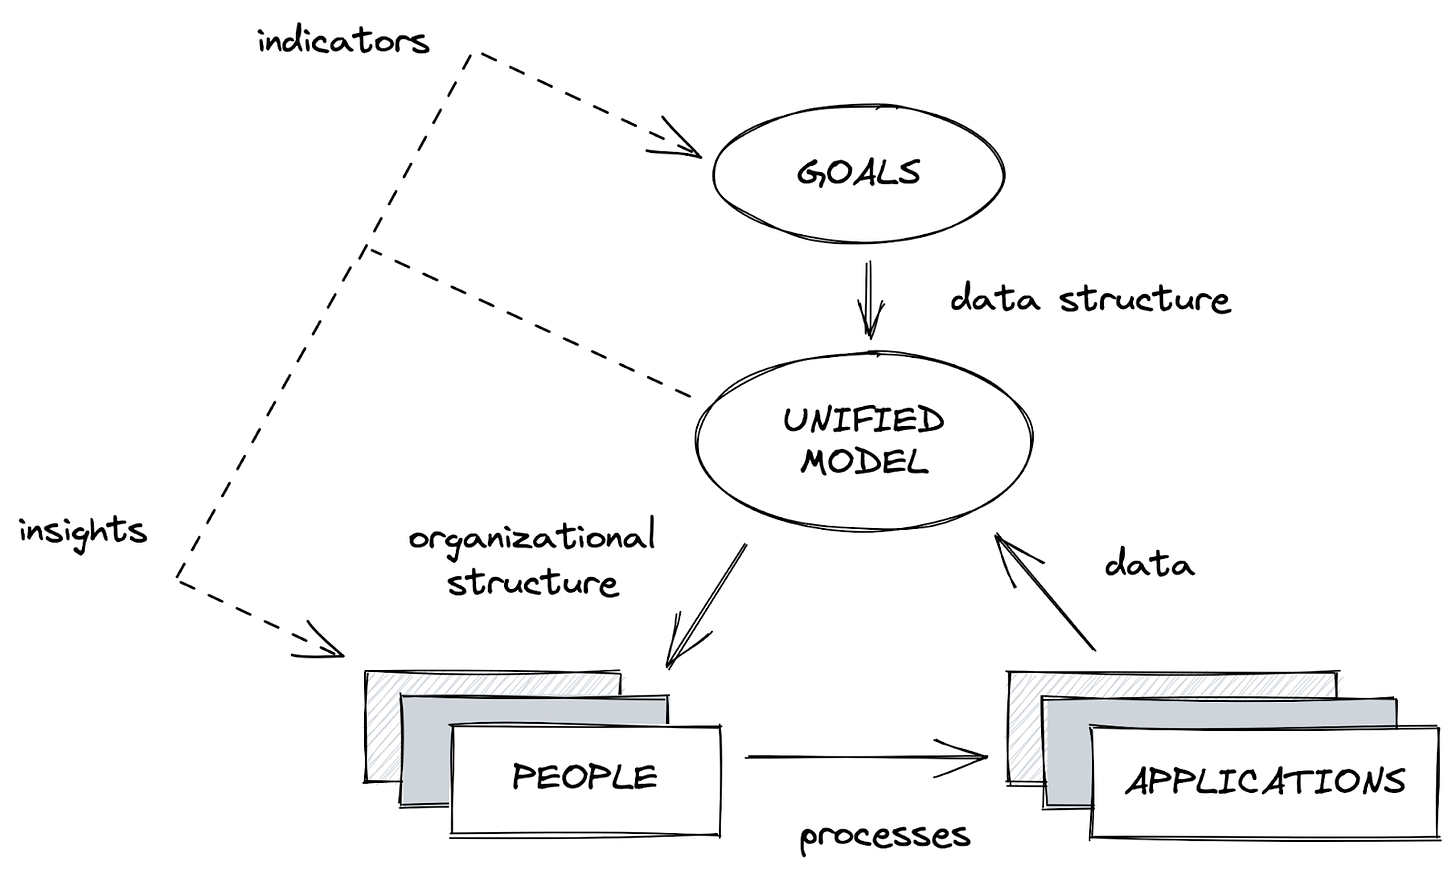 The Model-driven Organization seen schematically in a diagram.